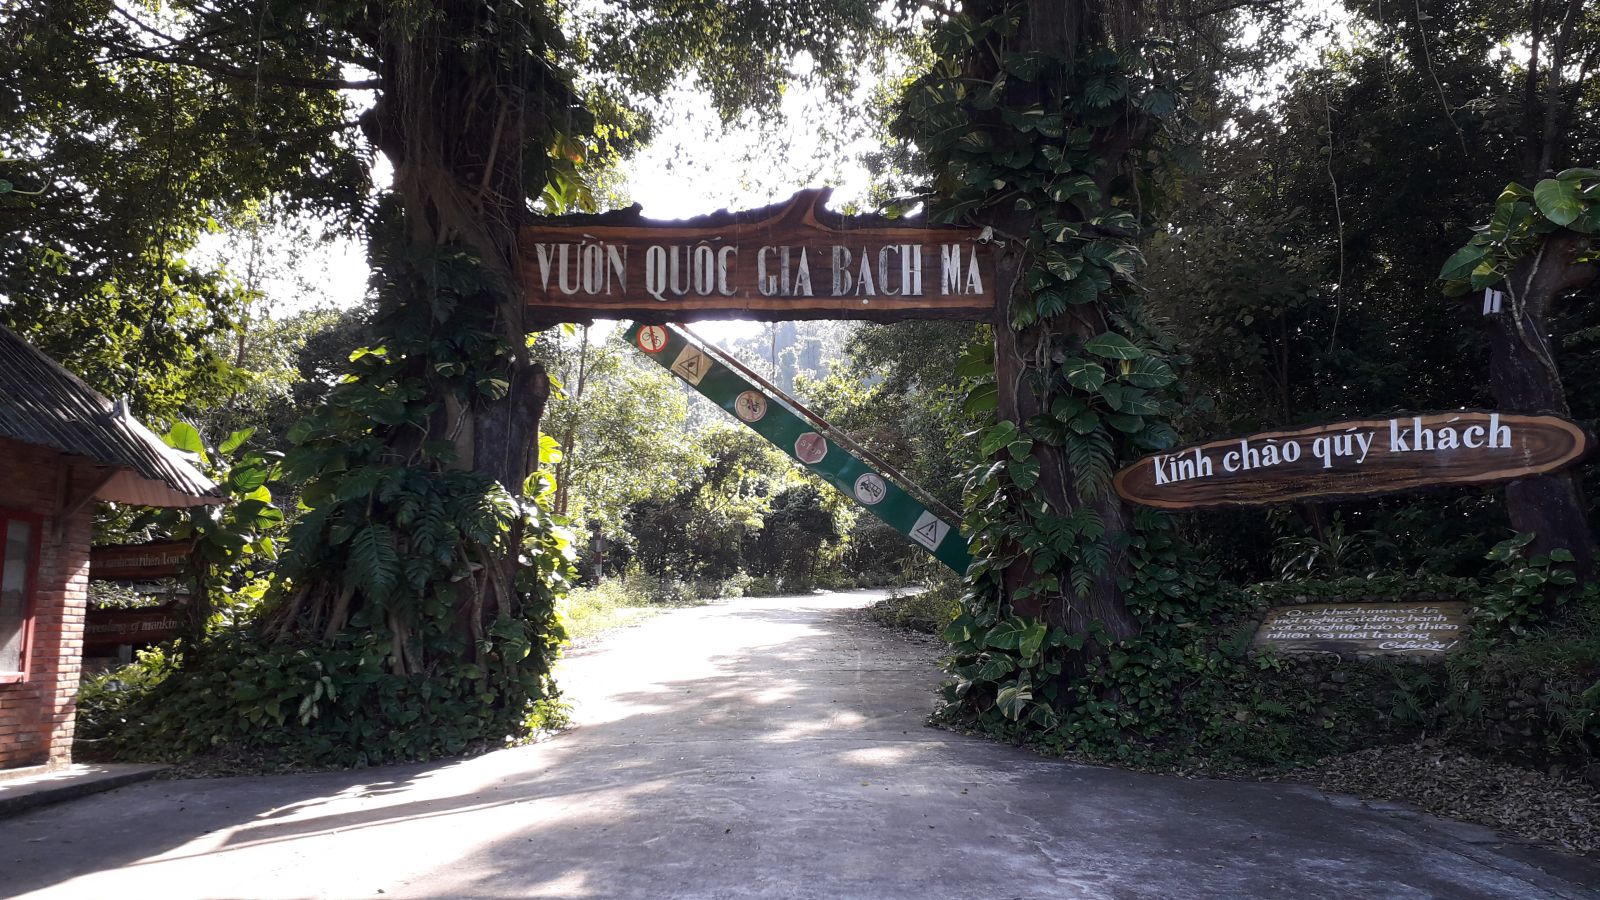 The gate to Bach Ma garden